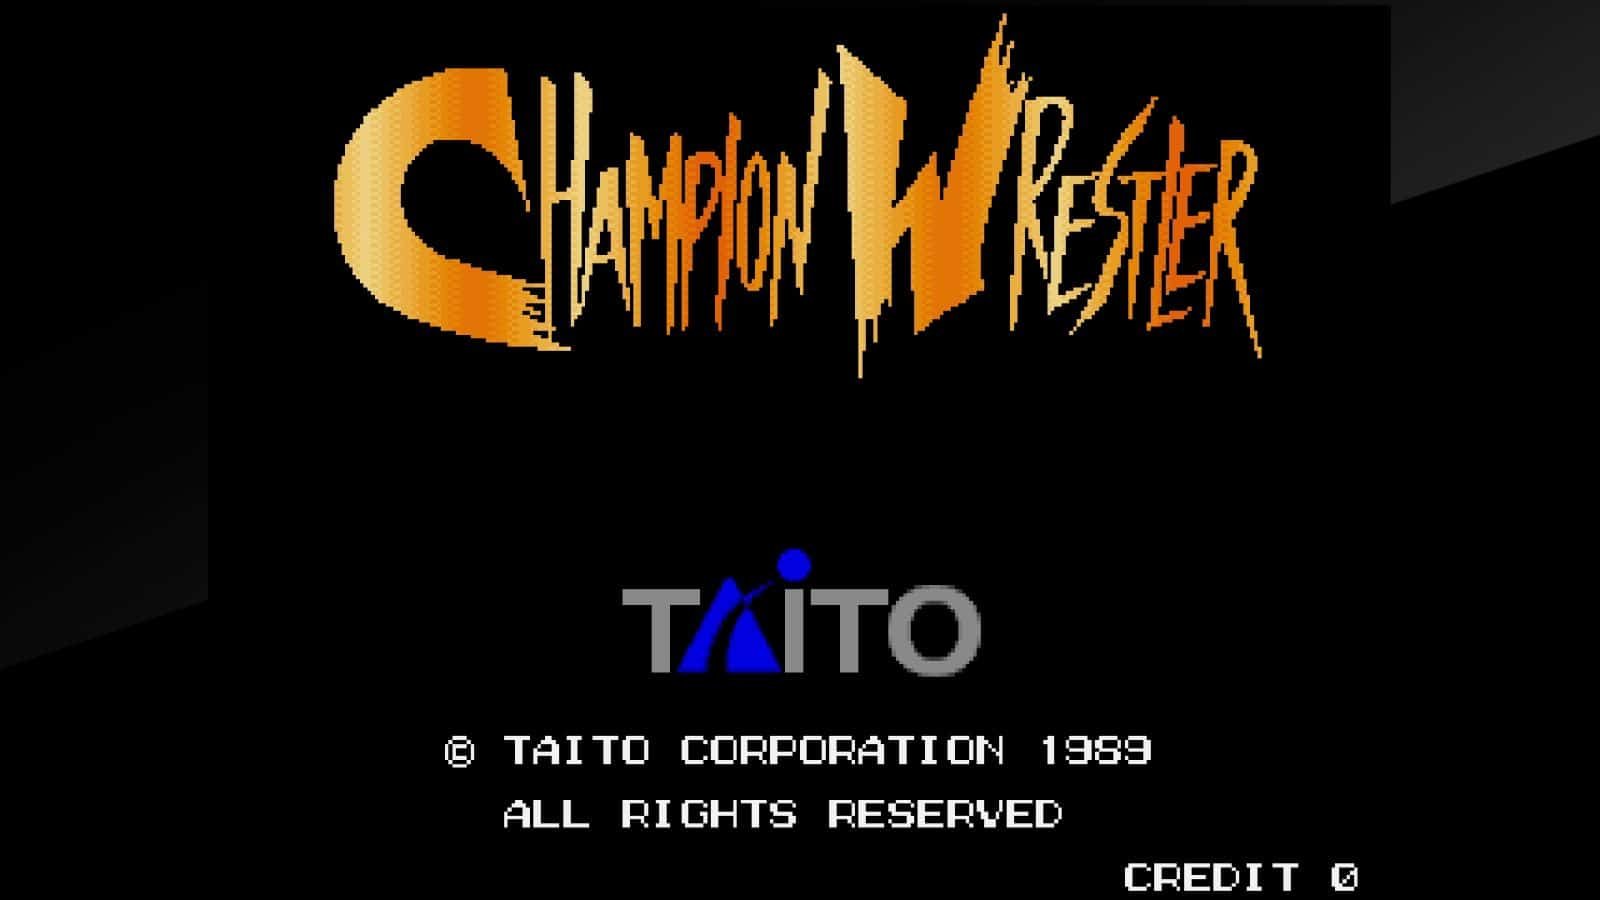 Champion Wrestler (1989)